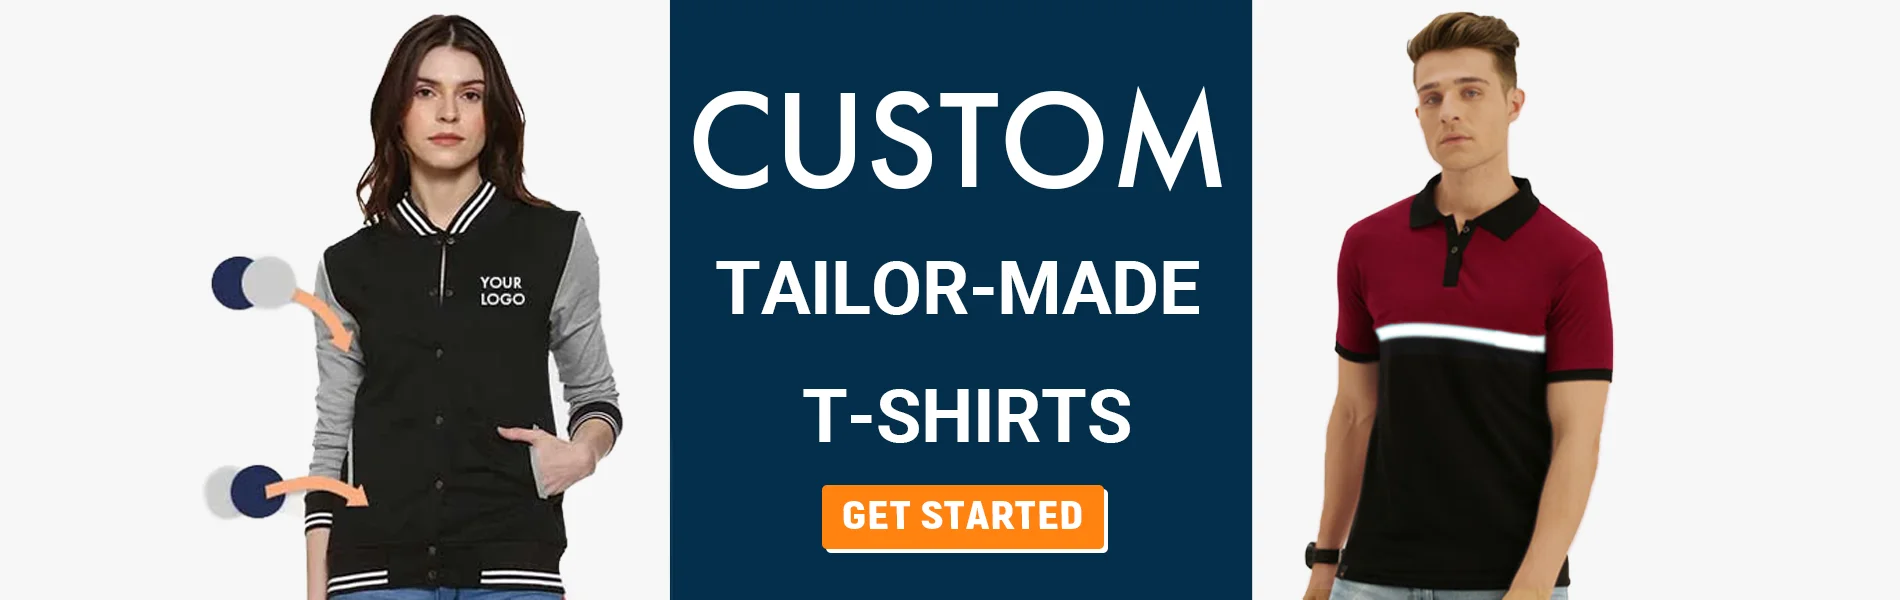 custom tailormade t-shirts nasik